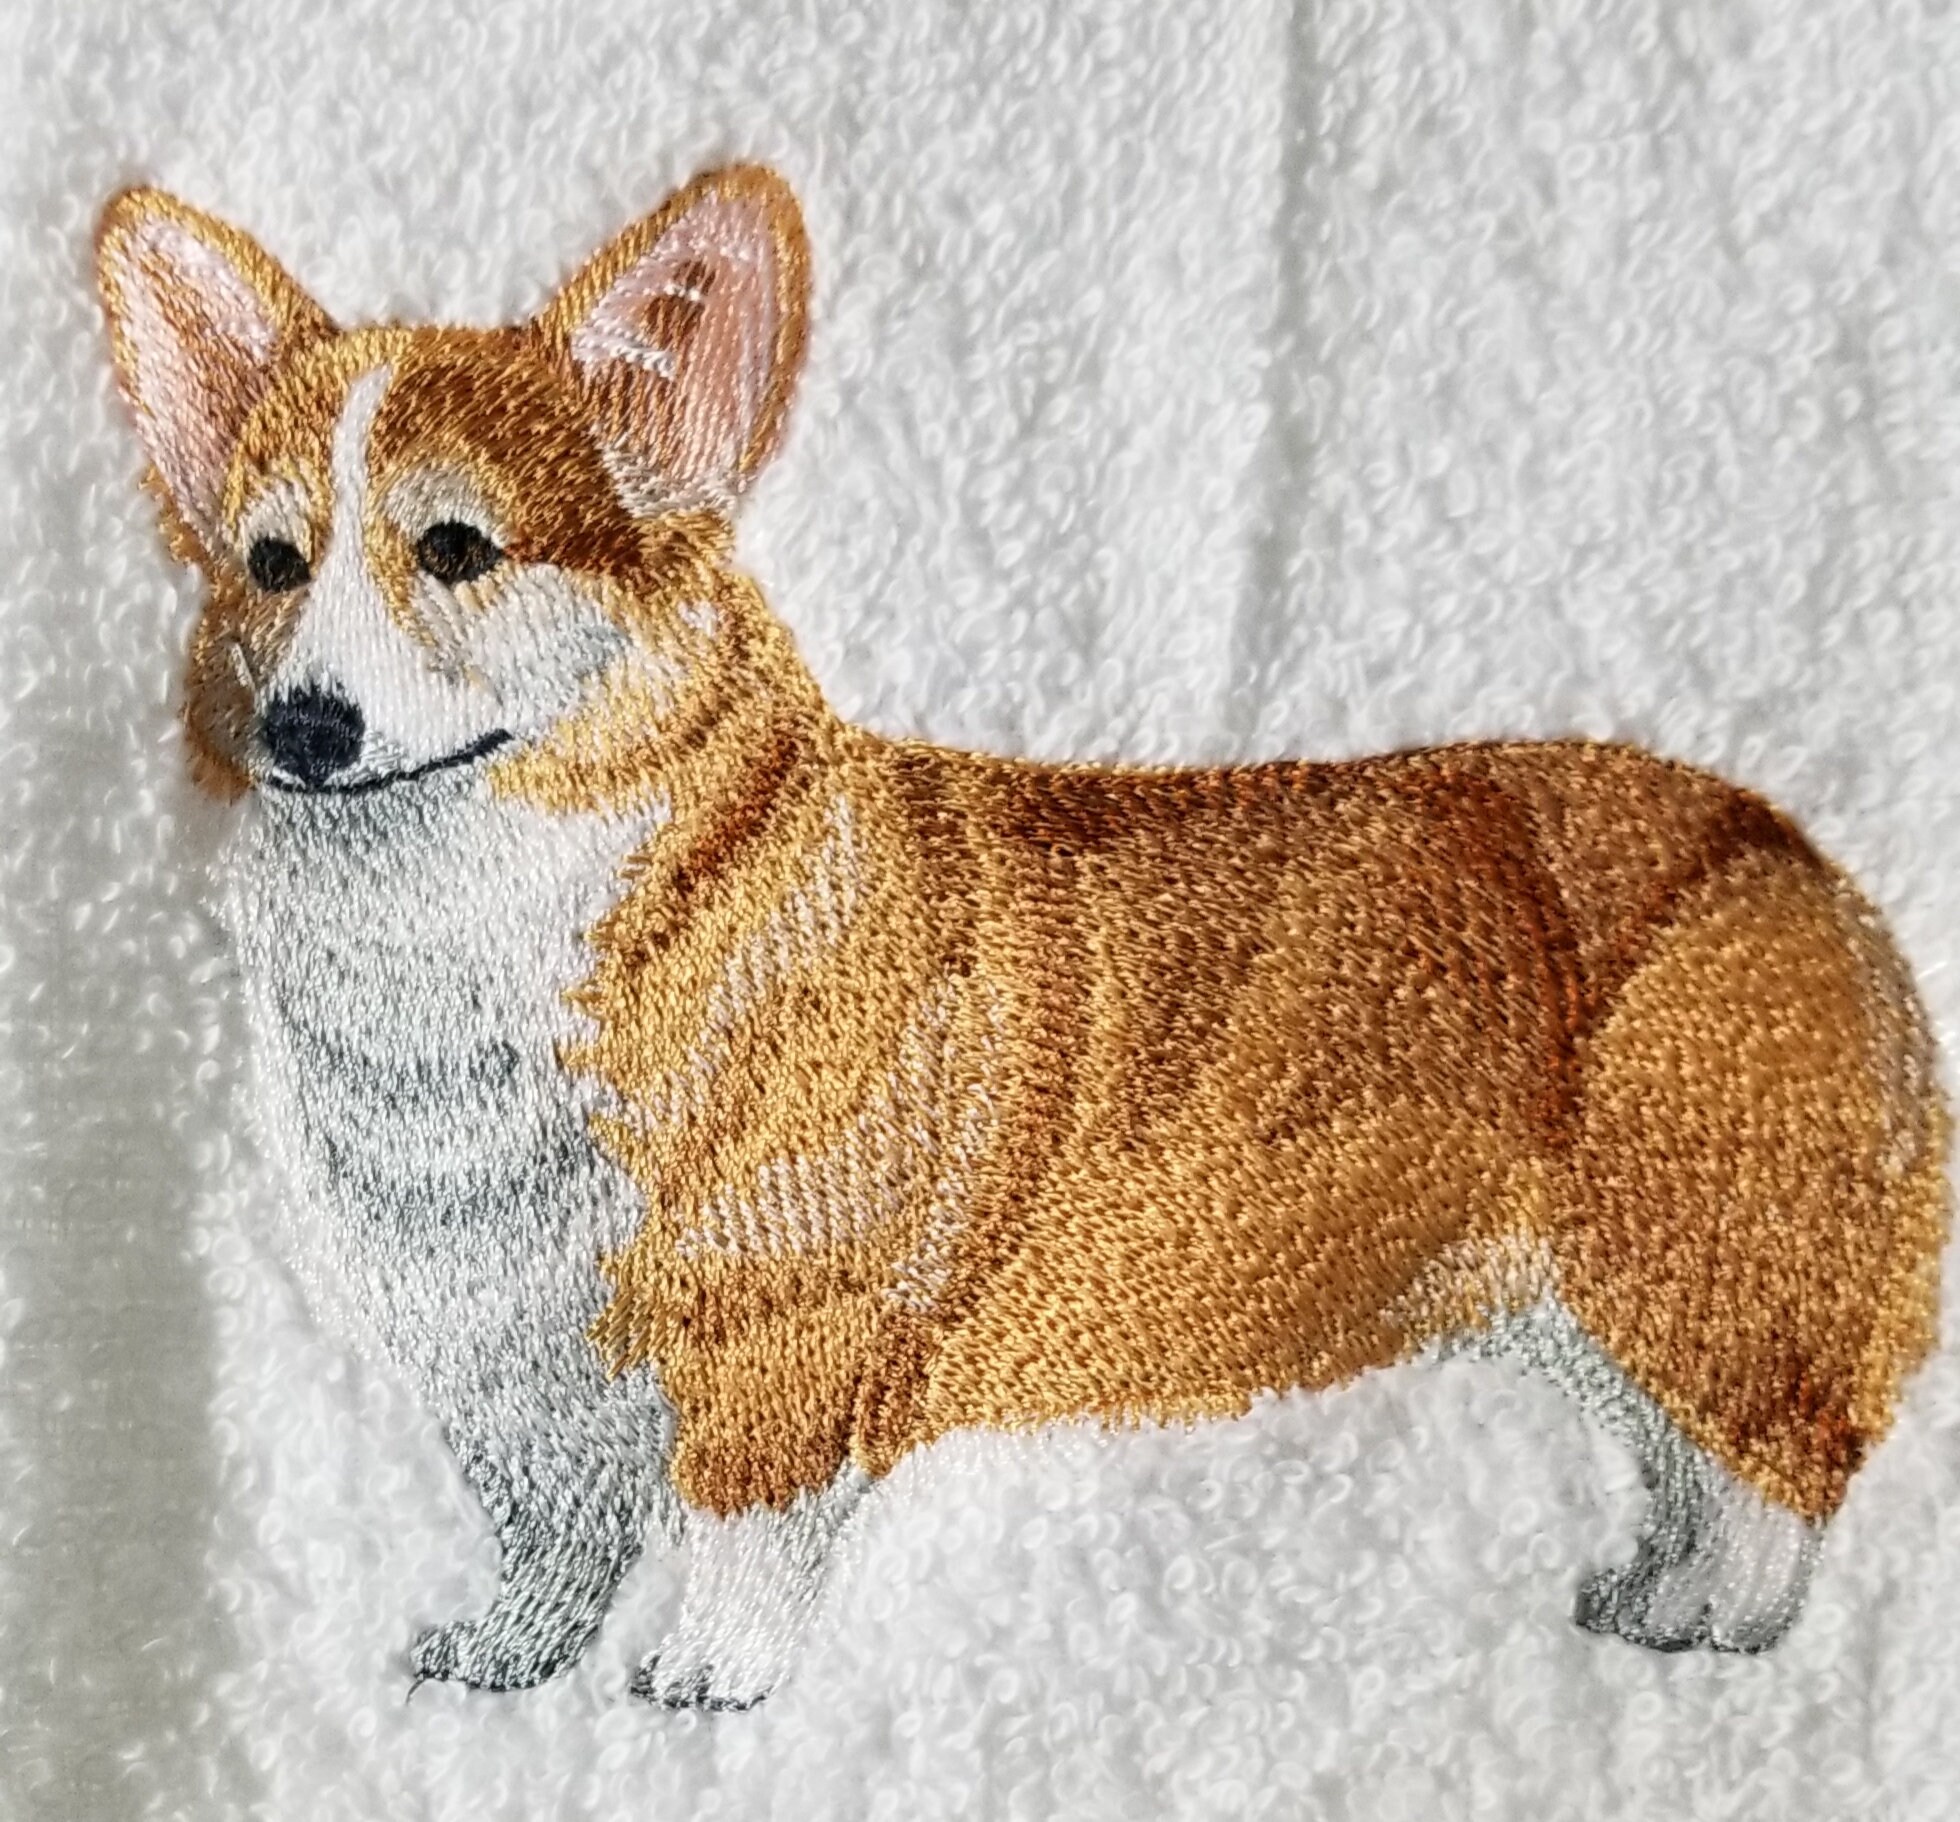 Pembroke Welsh Corgi Graffiti Embroidered T-Shirt – Sew Dog Crazy